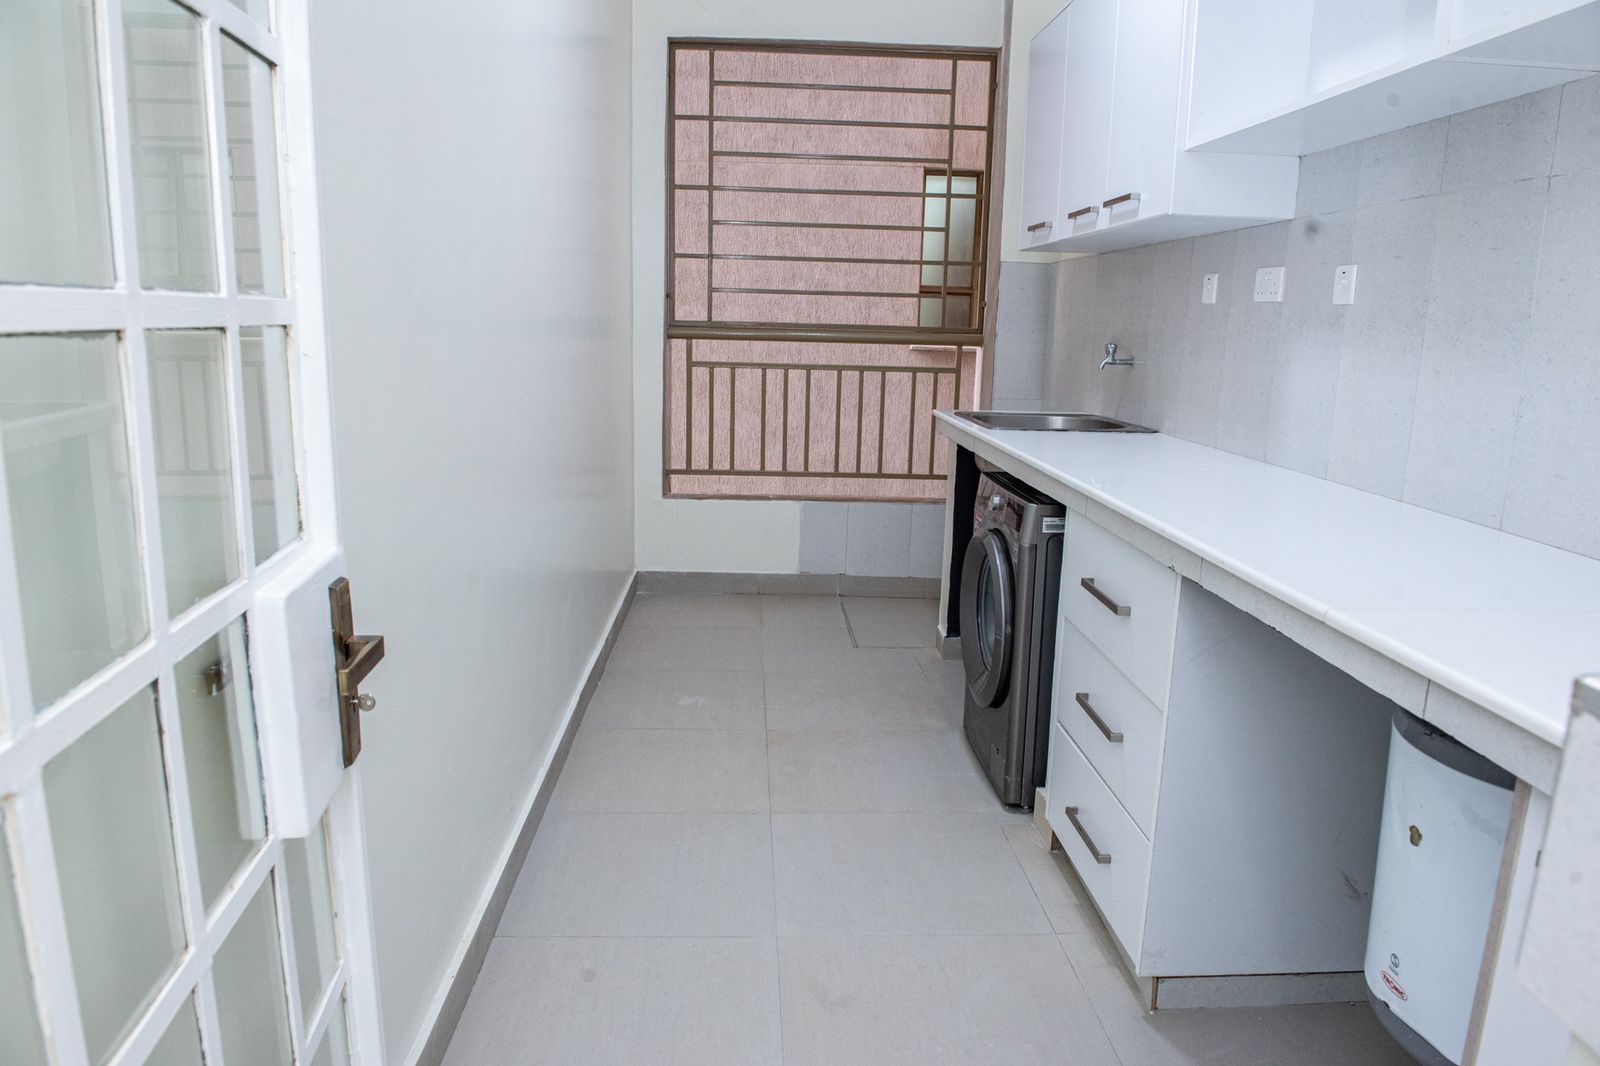 An Elegant Fully Furnished 2 Bedroom Apartments For Rent In Kileleshwa at Ksh180k:Month17